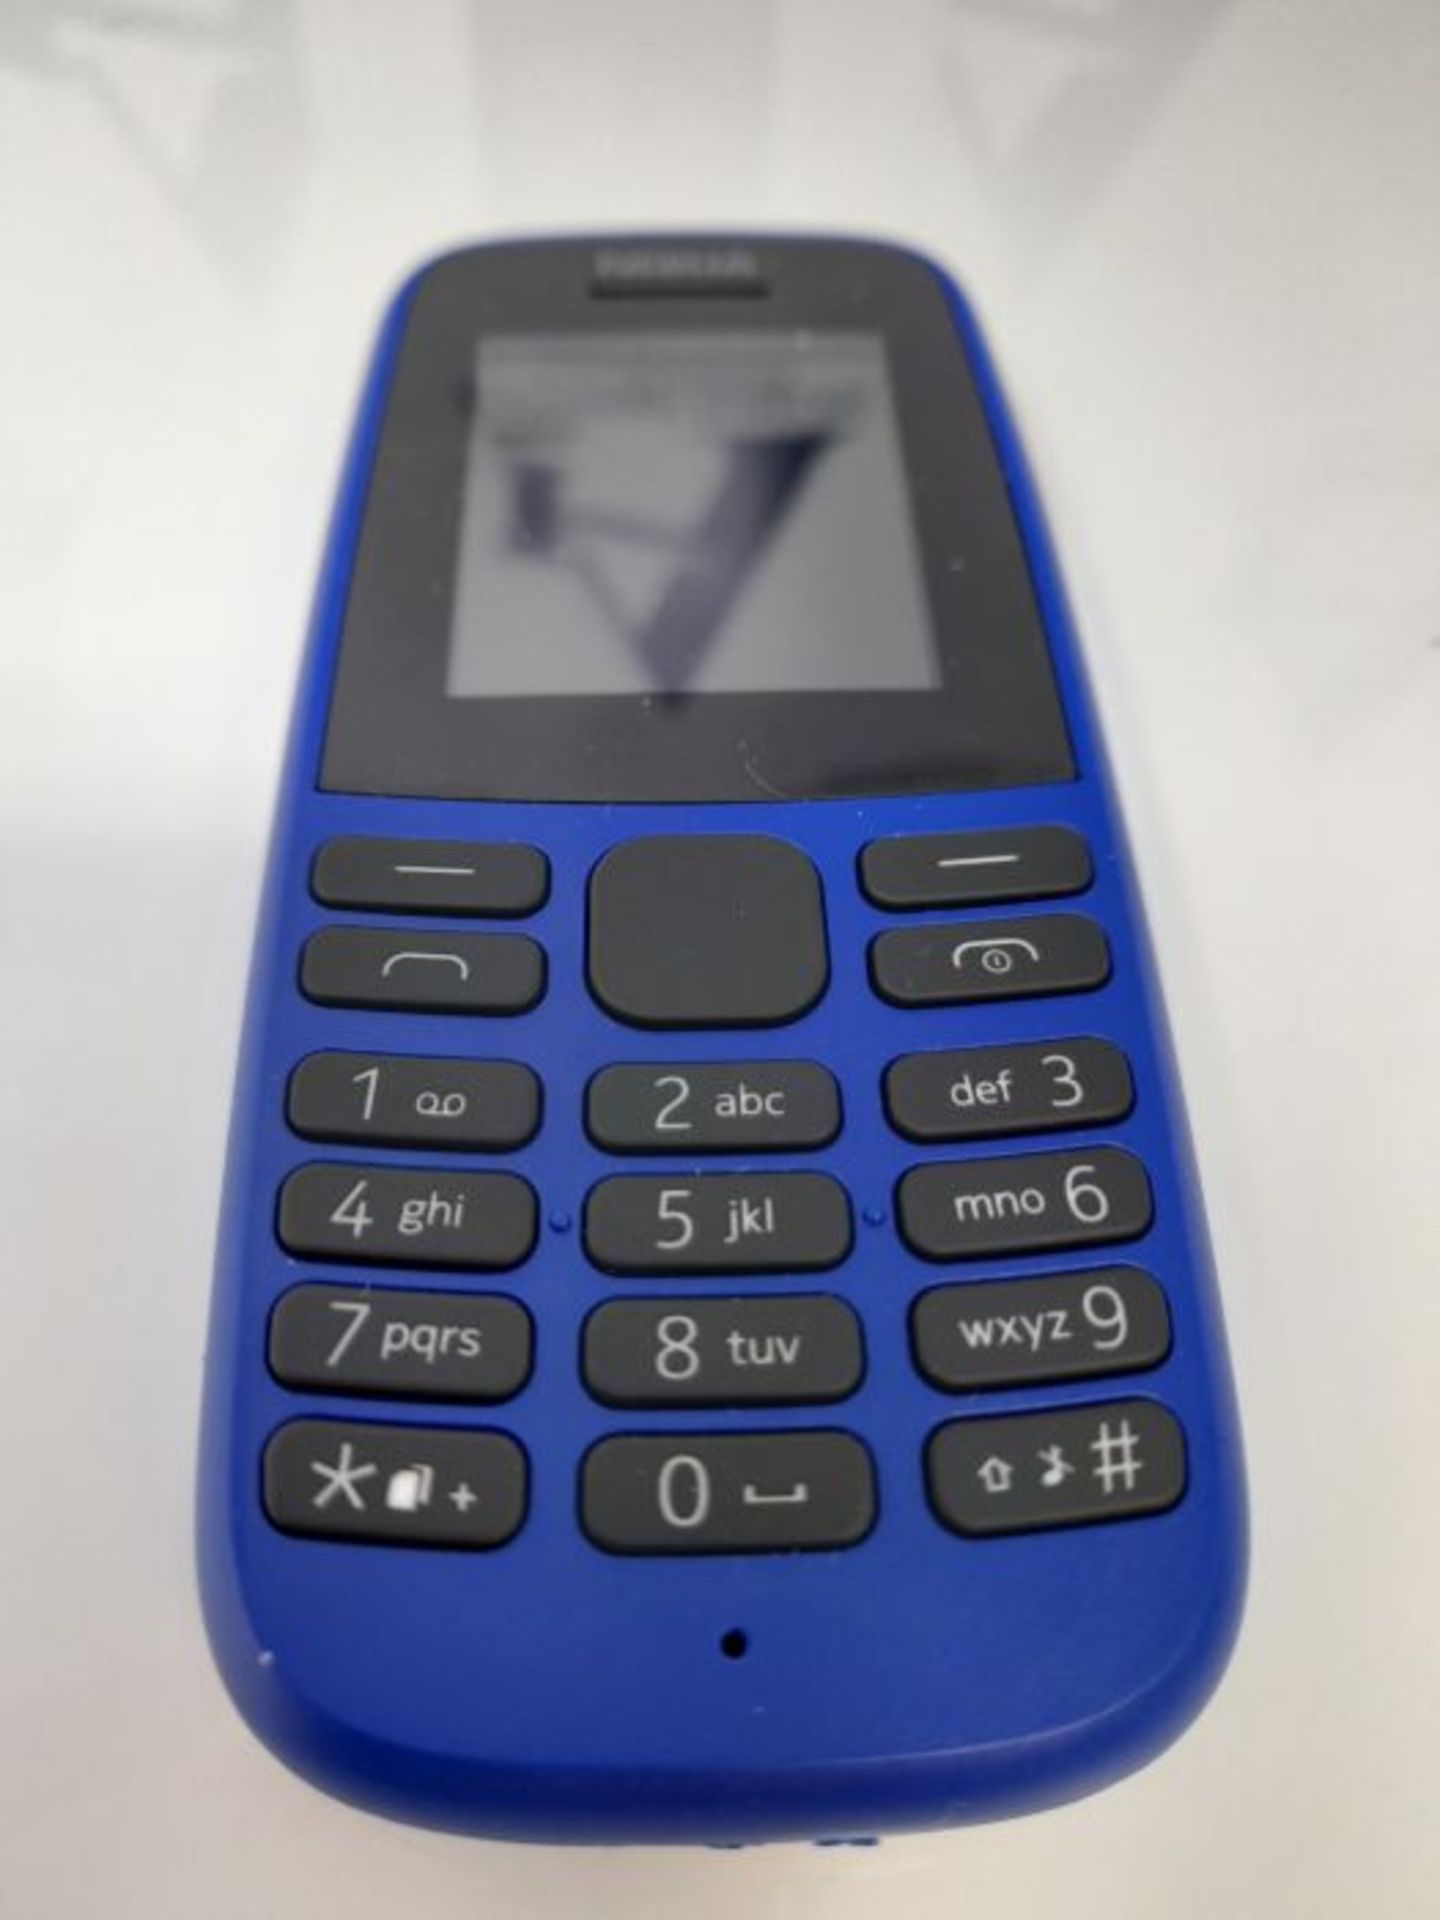 Nokia 105 Mobiltelefon (1, 8 Zoll Farbdisplay, FM Radio, 4 MB ROM, Dual-Sim) Blau, Ver - Image 3 of 3